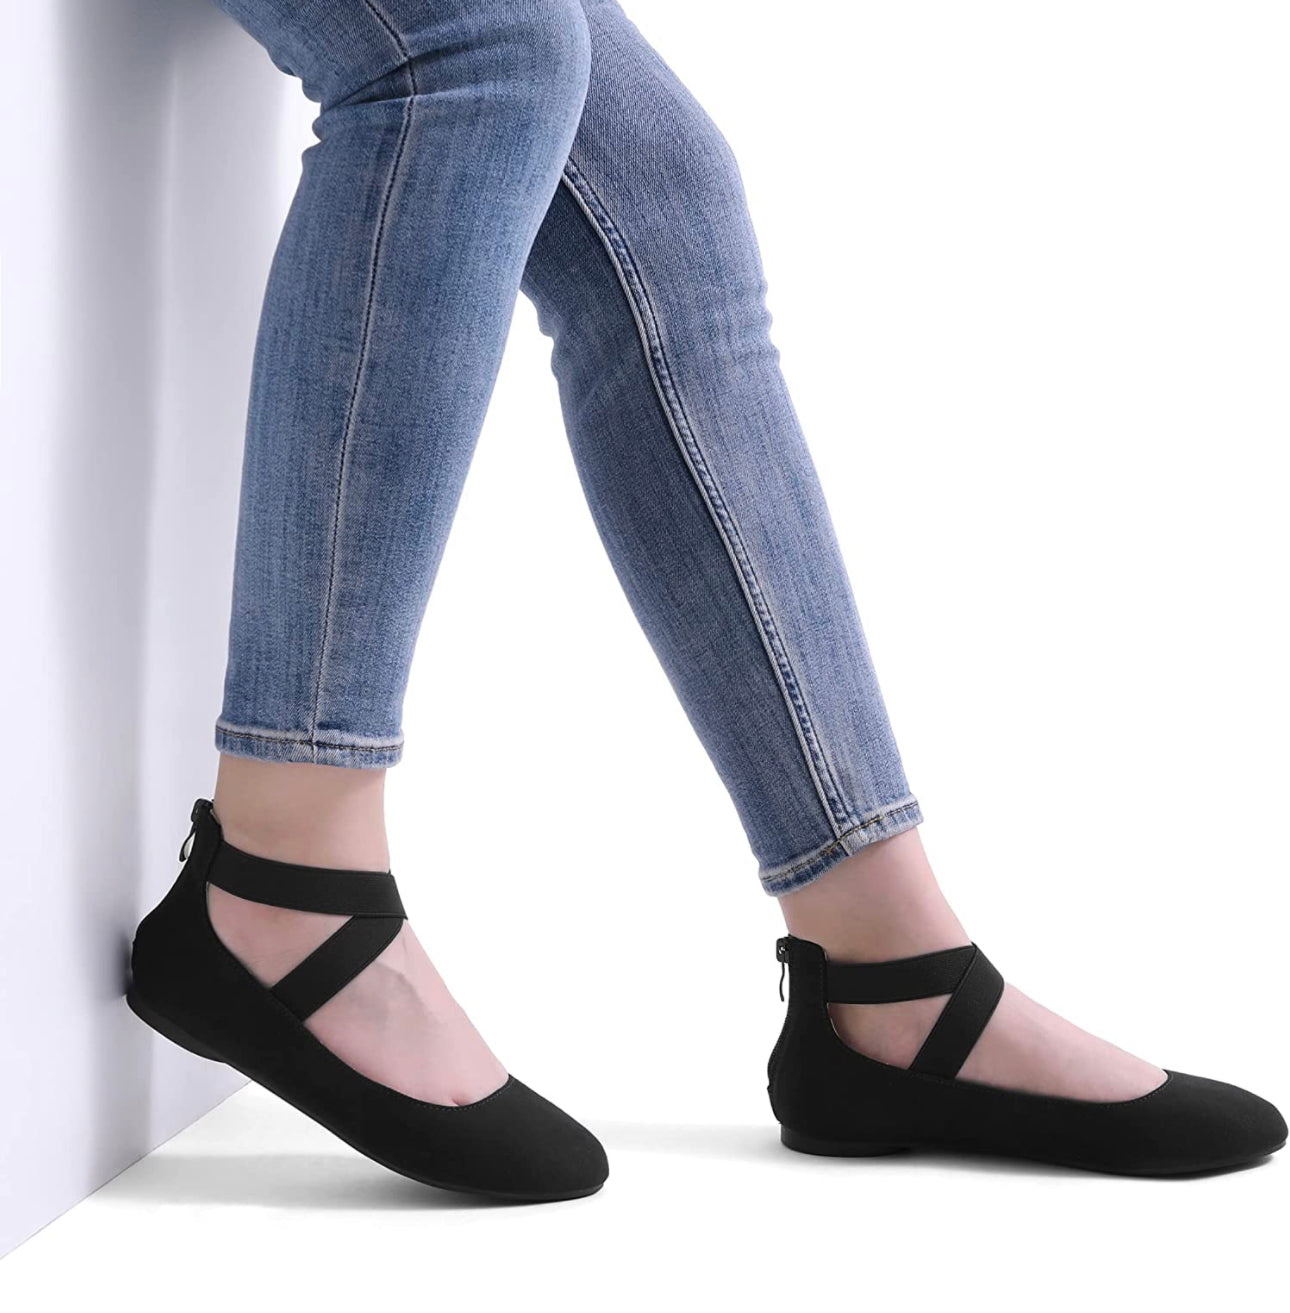 DREAM PAIRS Women's Comfortable Fashion Elastic Ankle Straps Flats Shoes size 7